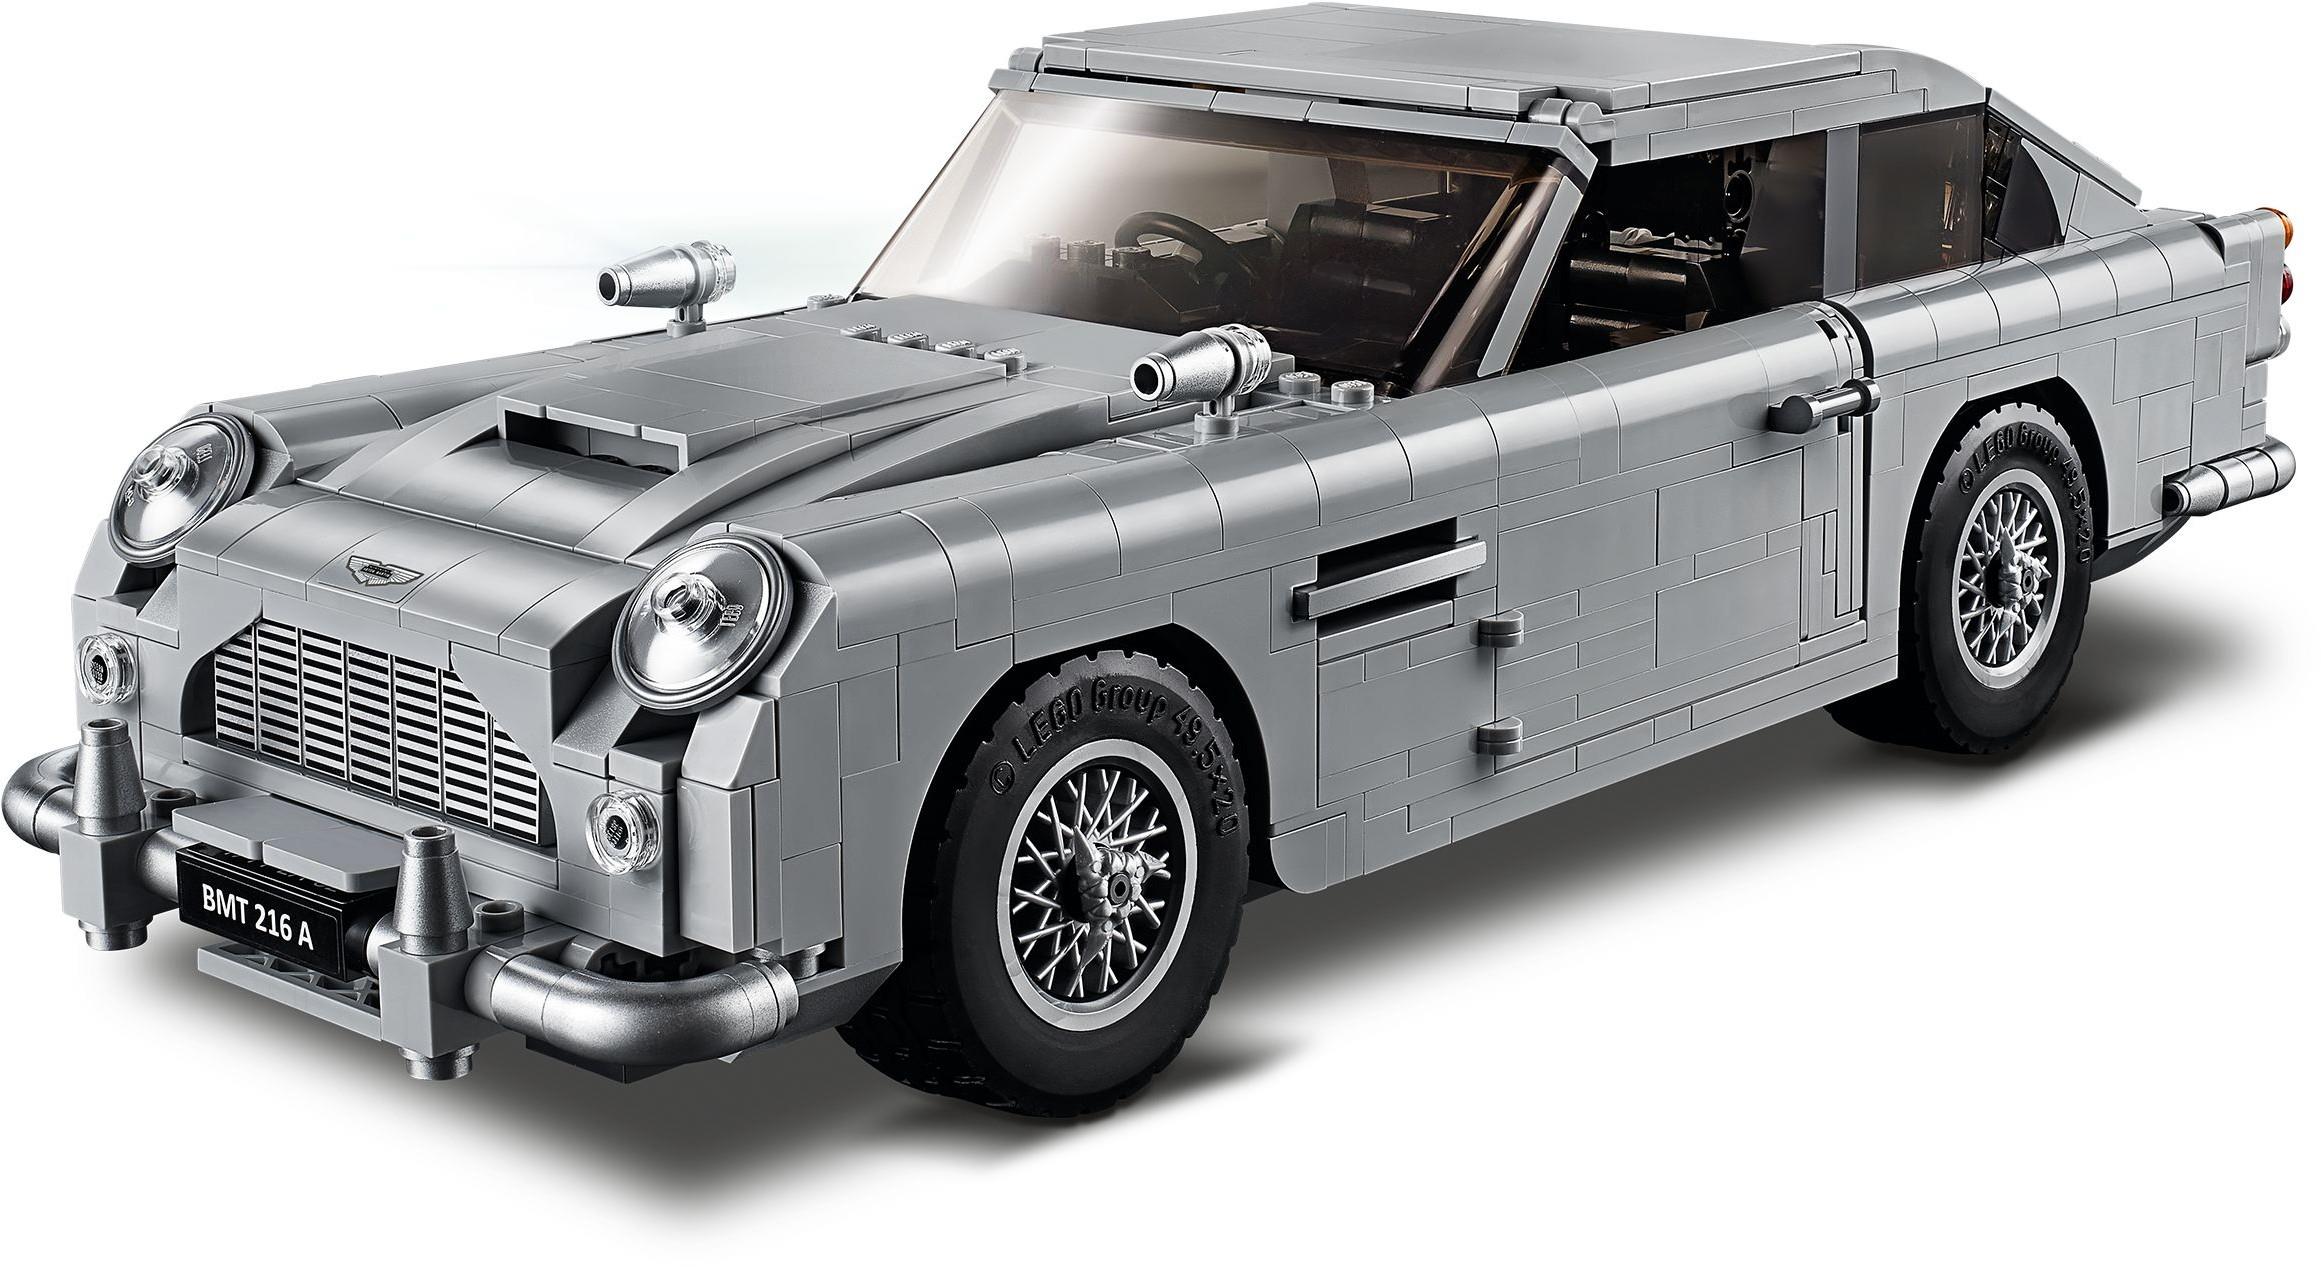 LEGO 10262 Creator Expert James Bond Aston Martin DB5 New Sealed SHIPS NOW! 